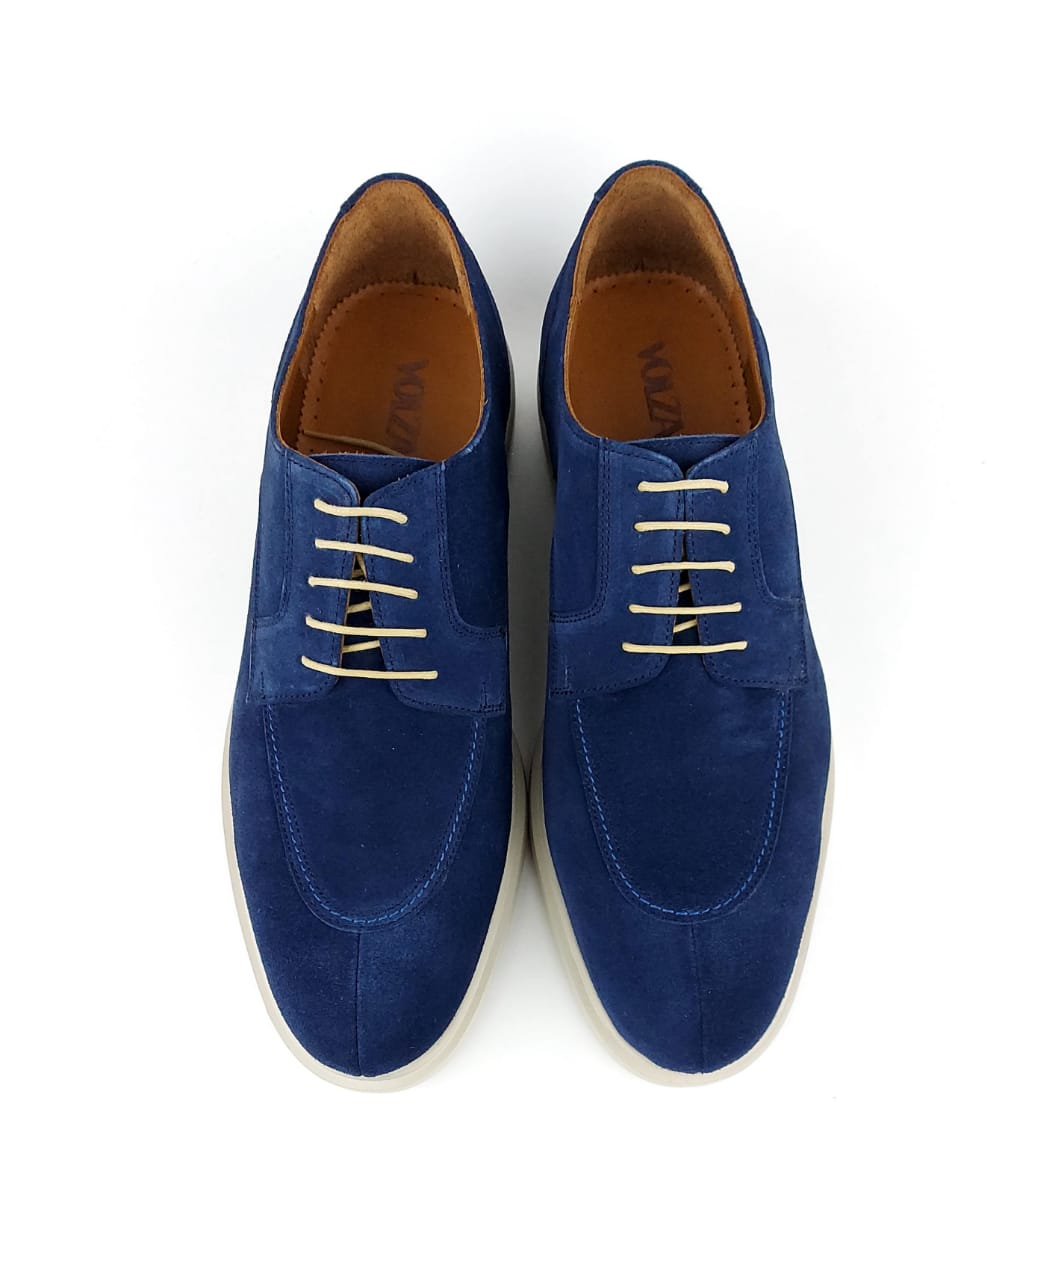 488 Chaussure en daim bleu